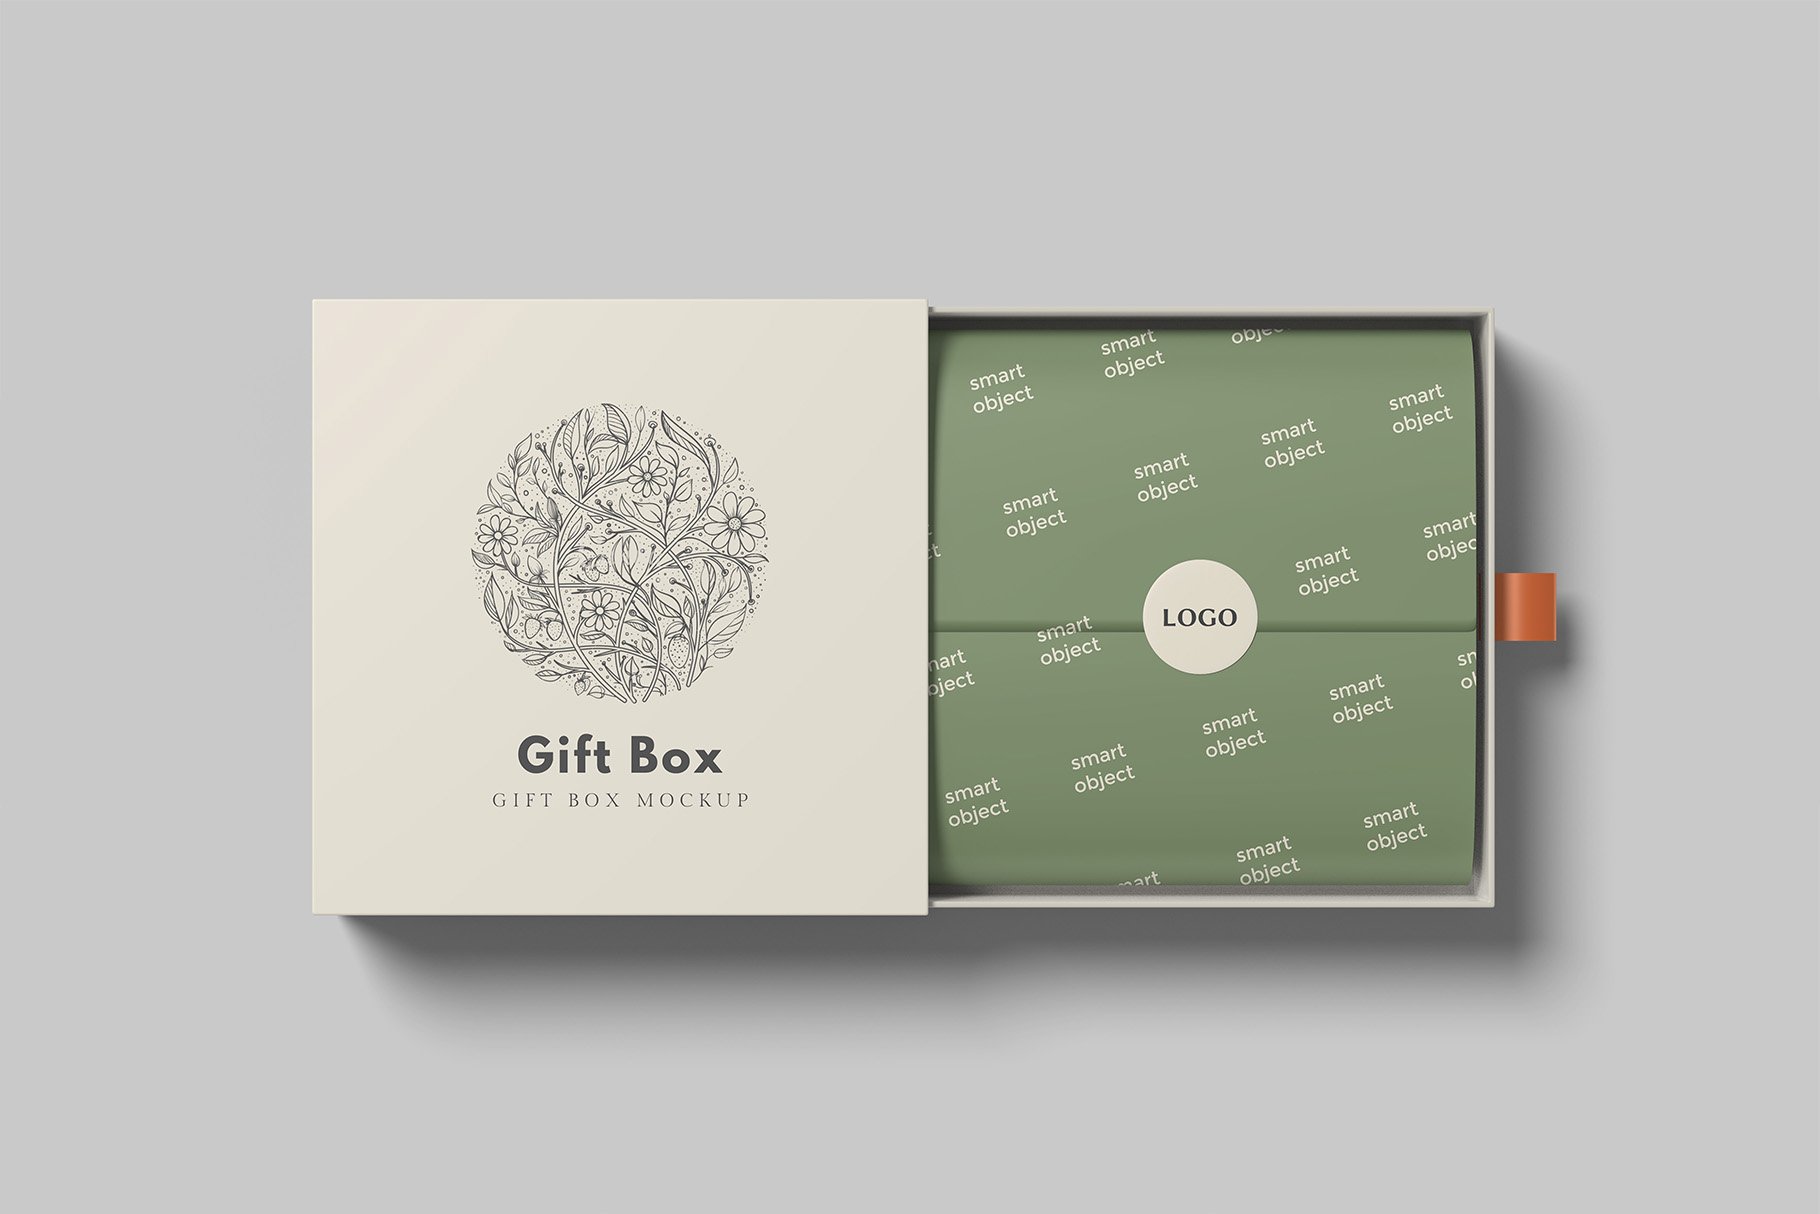 Gift Box Mockup cover image.